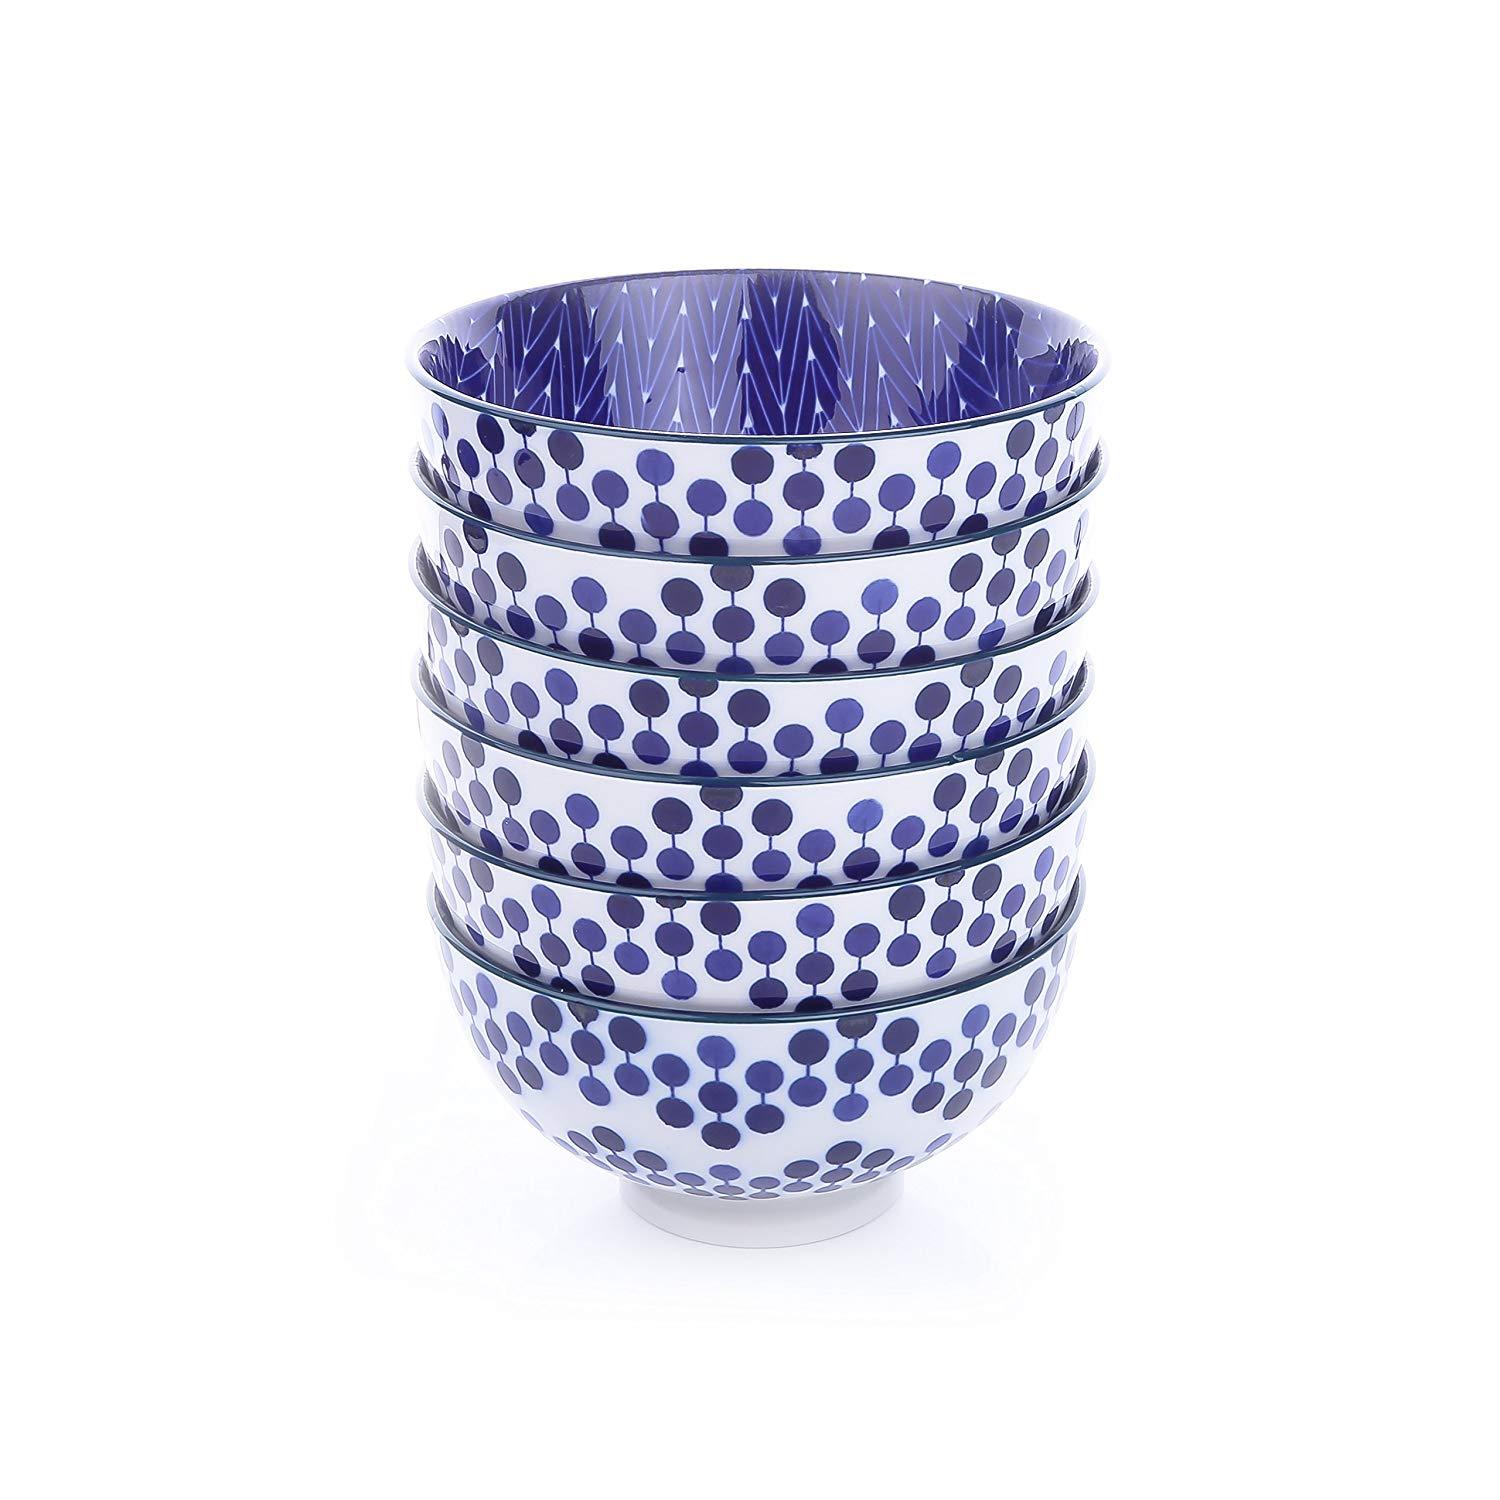 6-pieces Japanese Design Ceramic Bowls Set Blue and White Spot Bowl - Nordic Side - and, Blue, Bowl, Bowls, Ceramic, CerealSoupNoodleRamenRice, Design, Japanese, pieces, Set, Spot, Vancasso, 